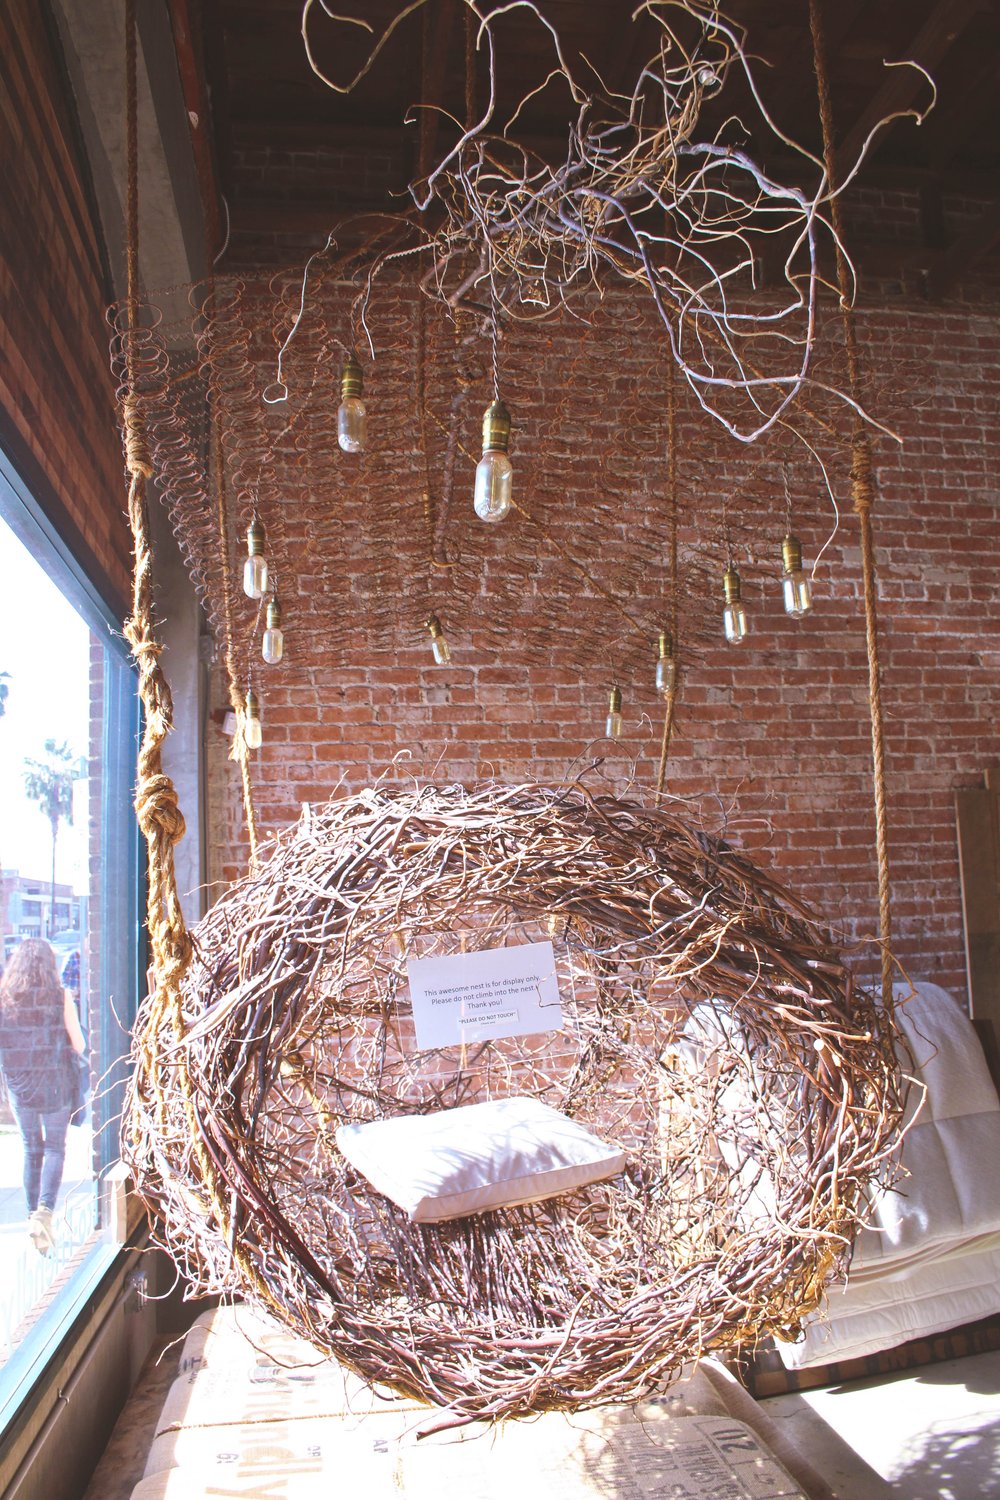 EP - store bird nest.jpg